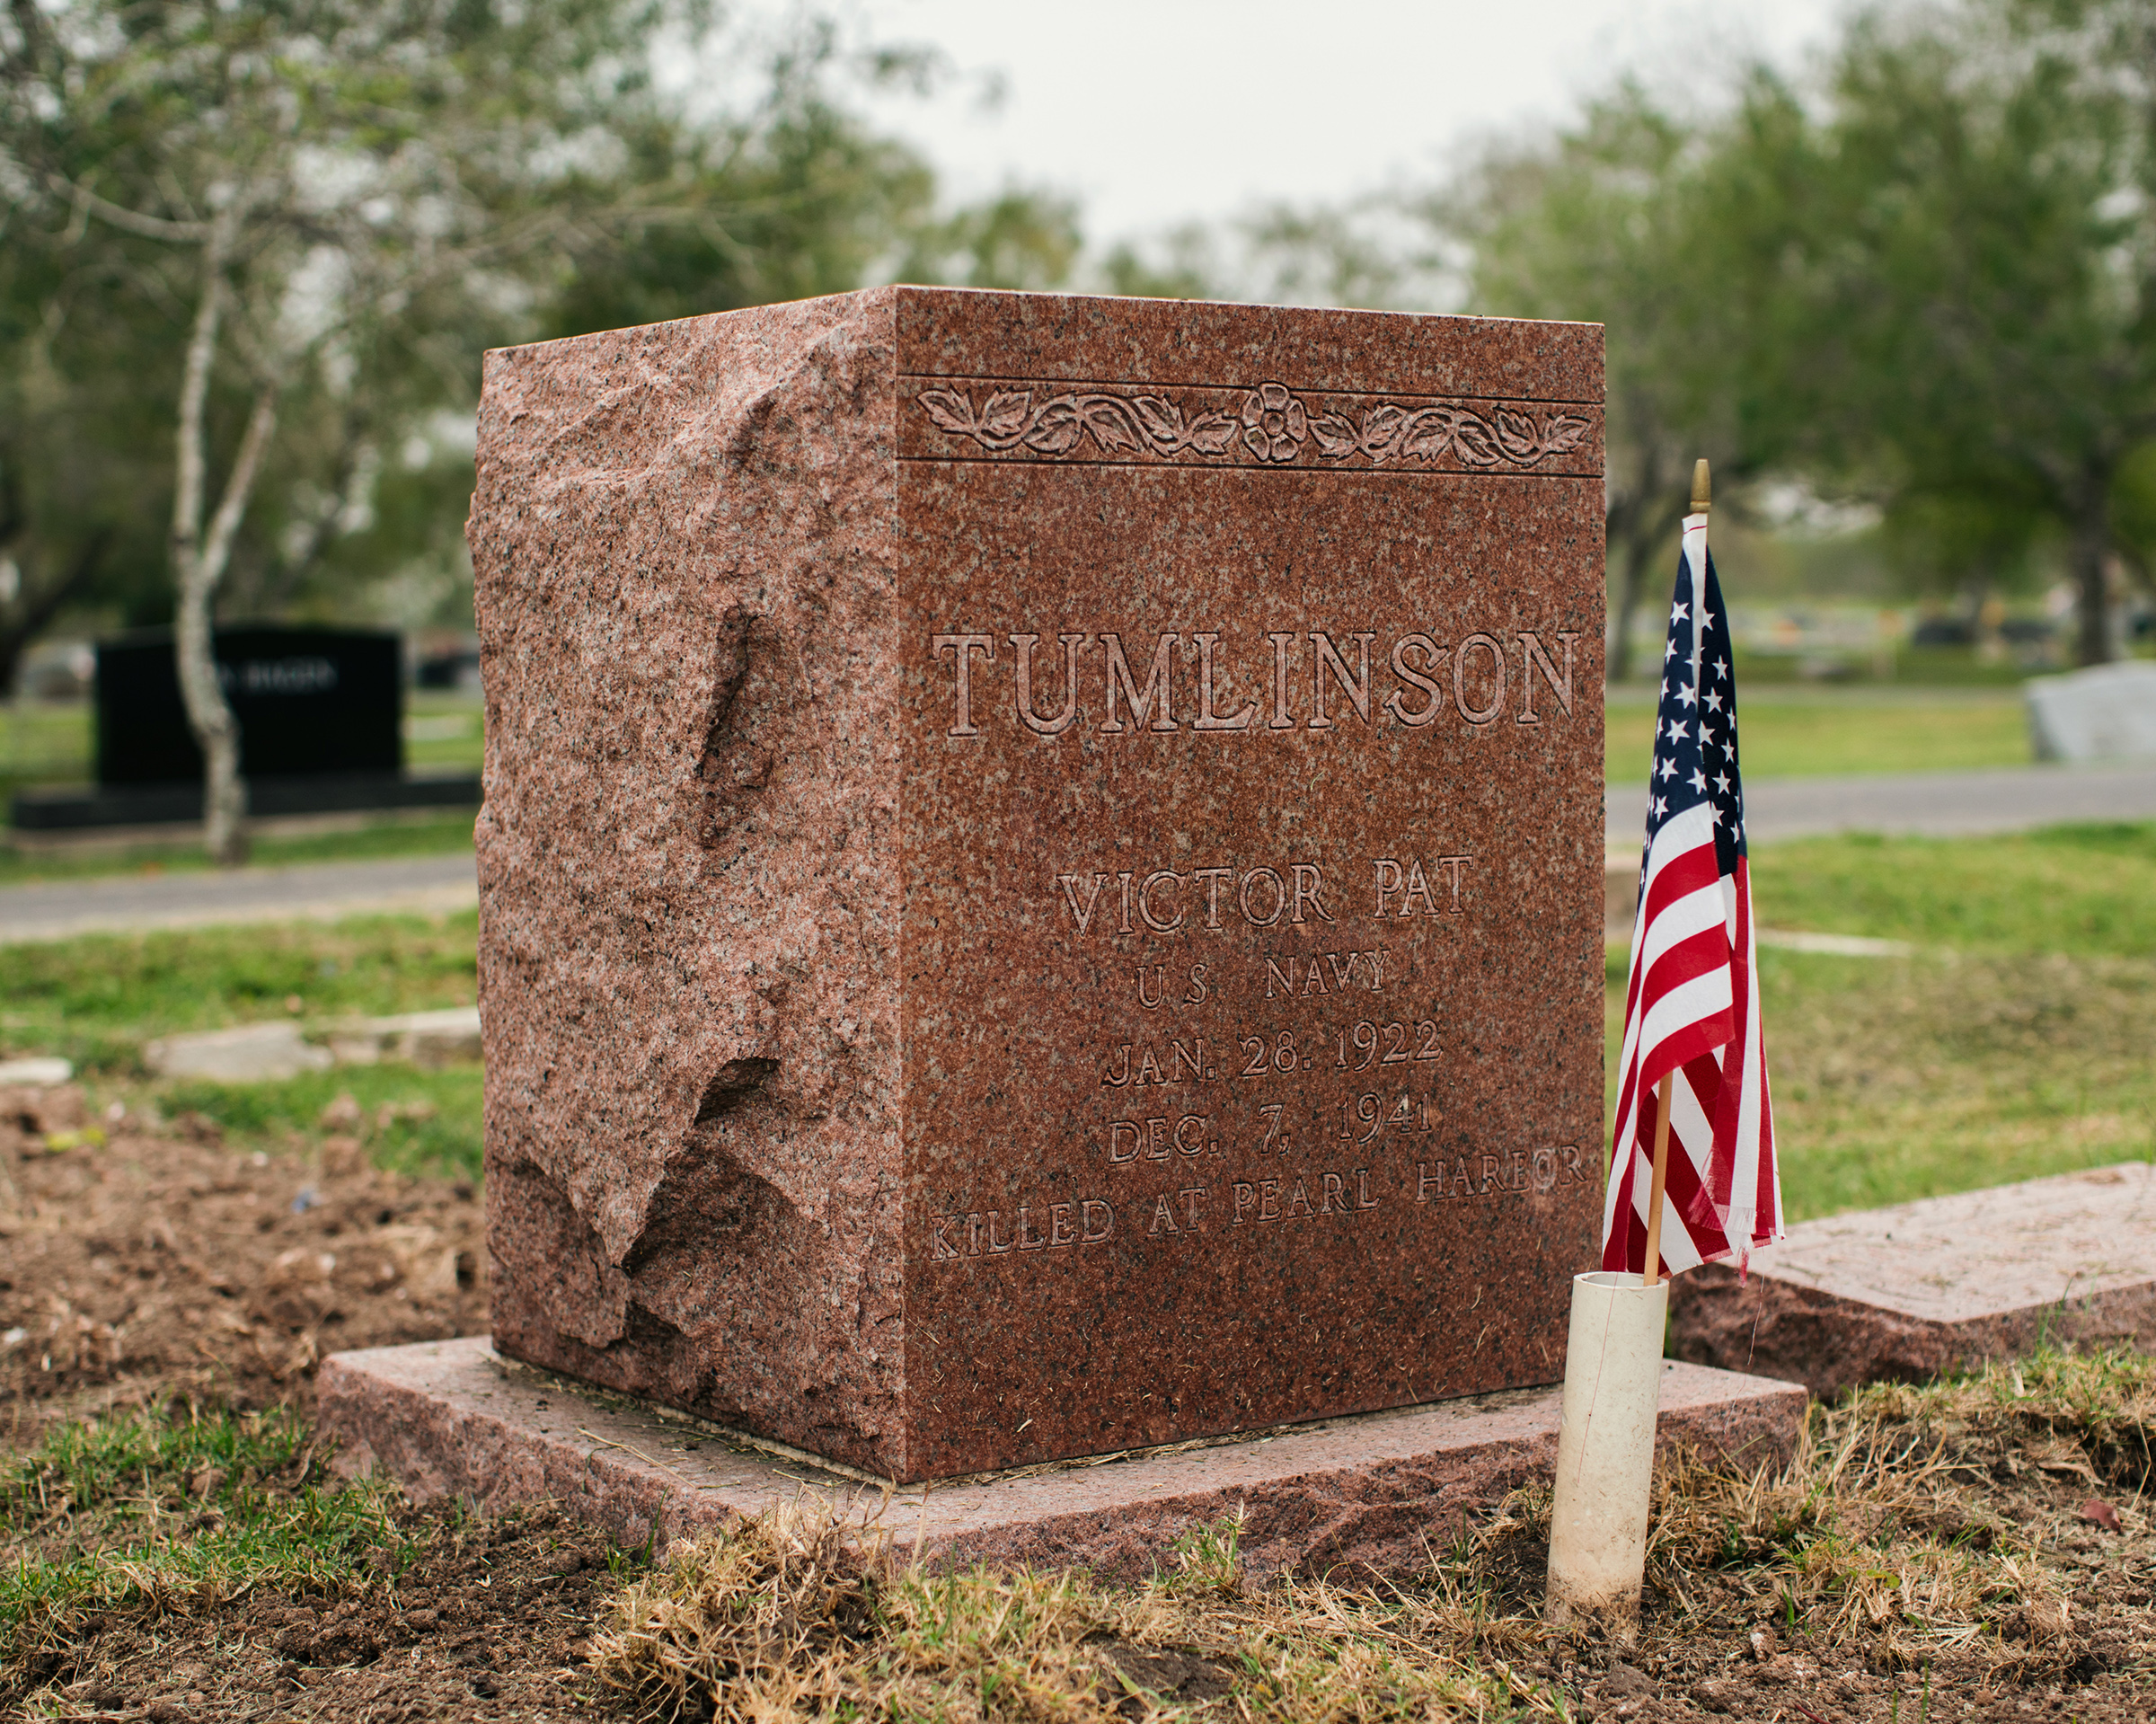 Victor 'Pat' Tumlinson's grave marker at Raymondville Memorial Cemetery in Raymondville, TX. (Bryan Schutmaat for TIME)